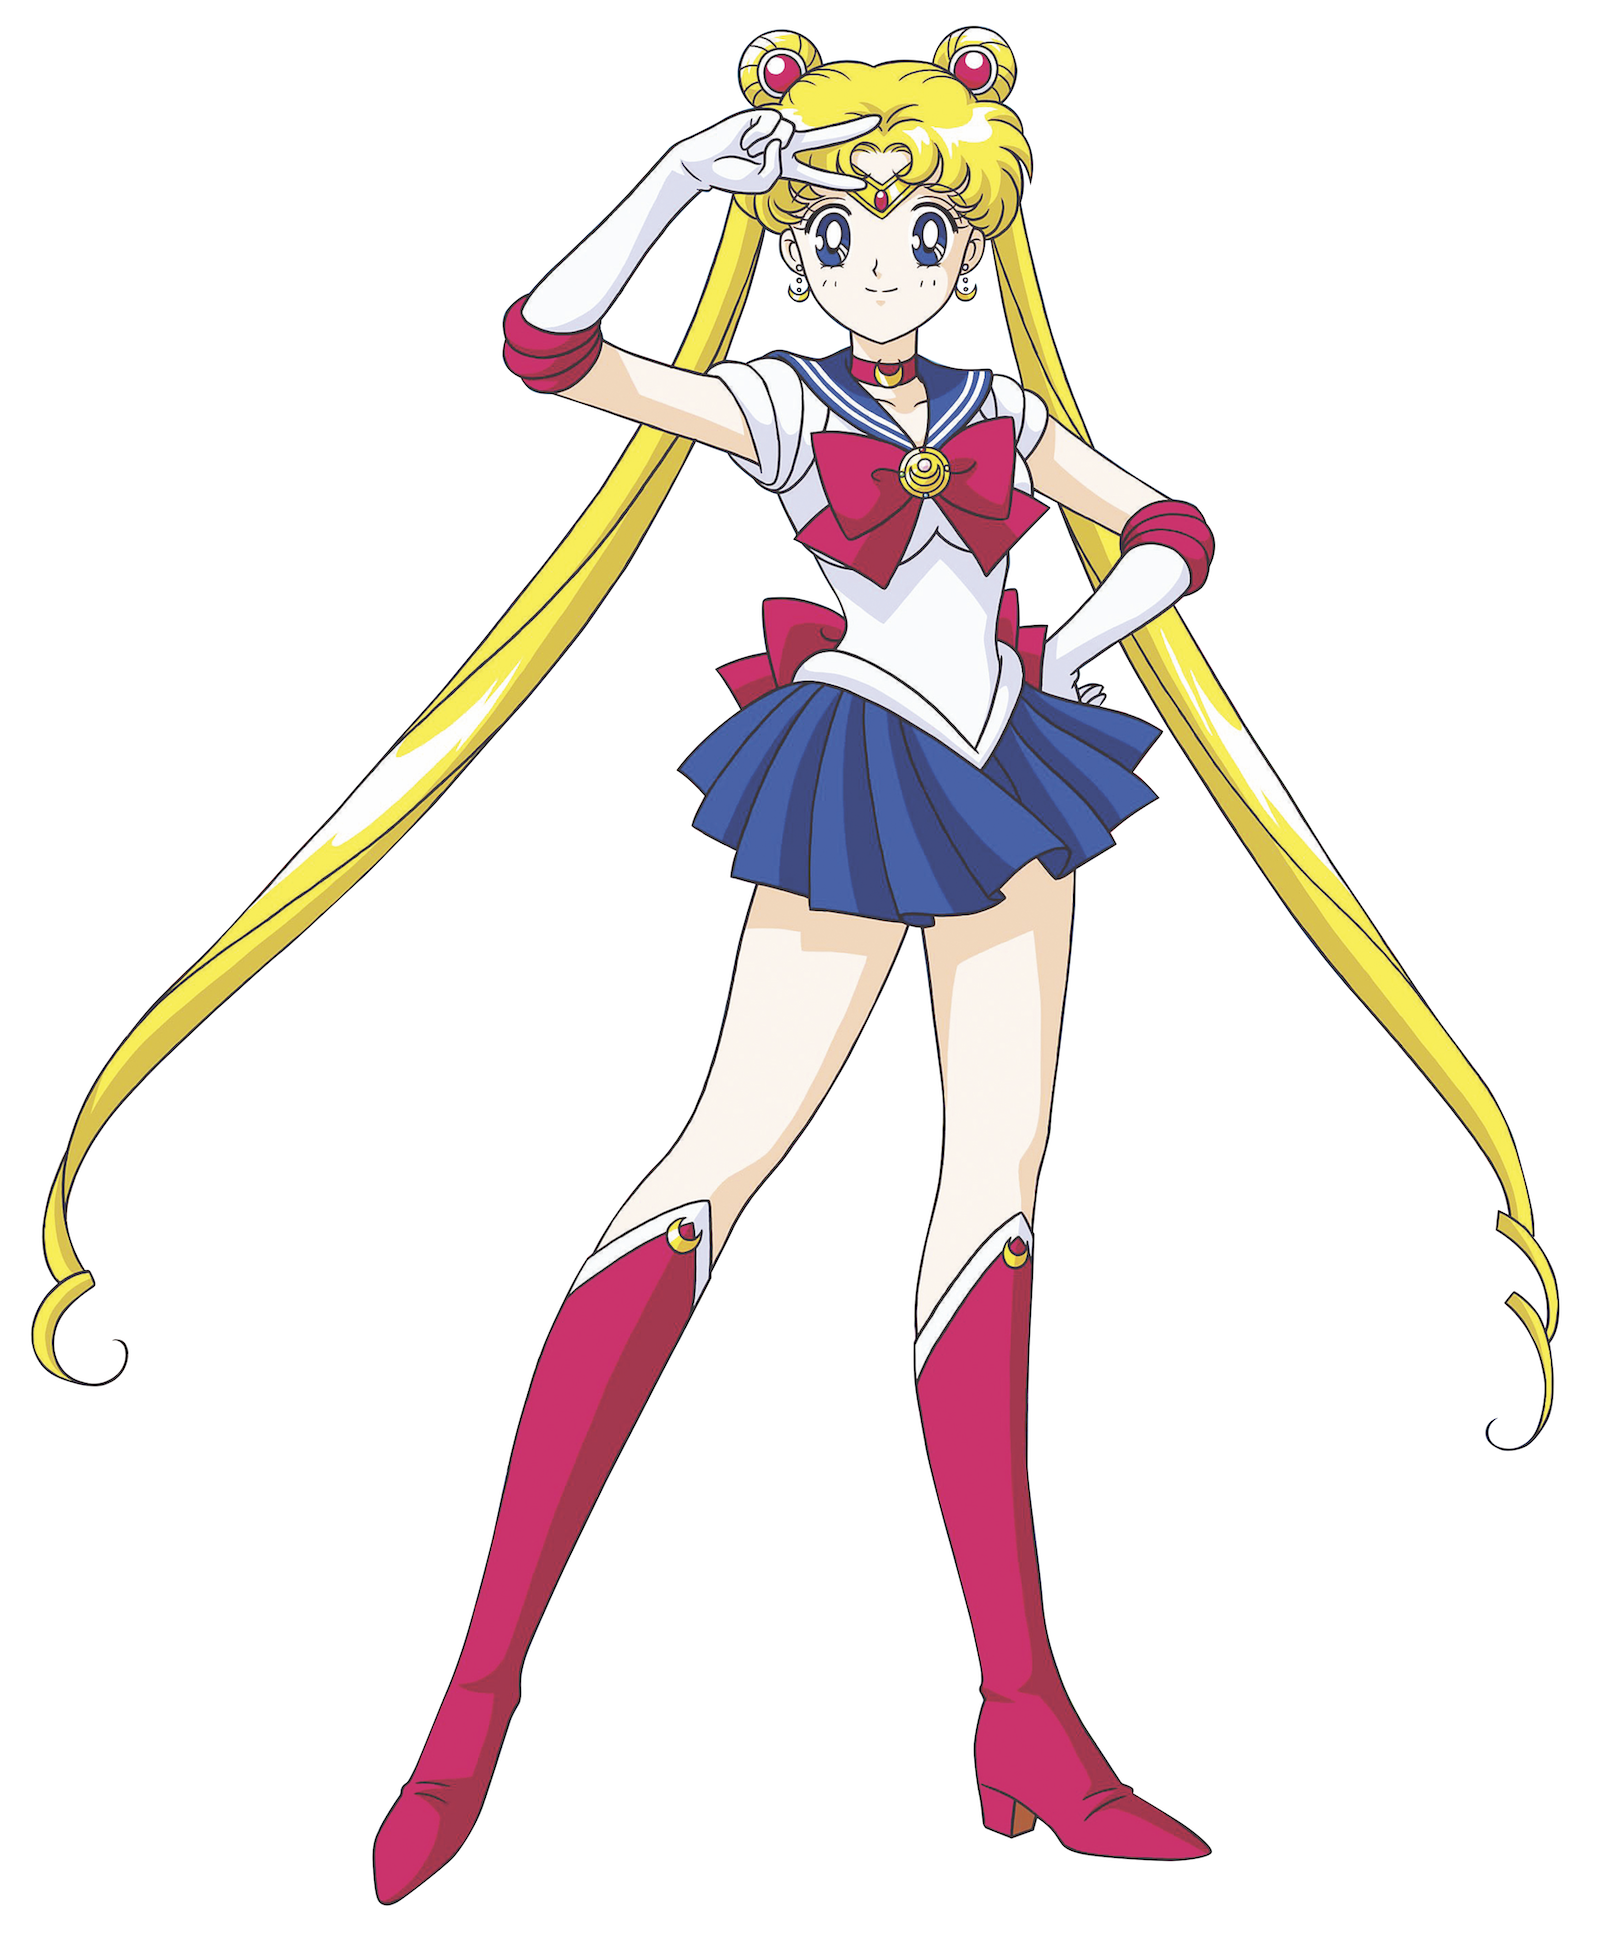 Sail On Sailor Sailor Moon Turns 25 The Spokesman Review